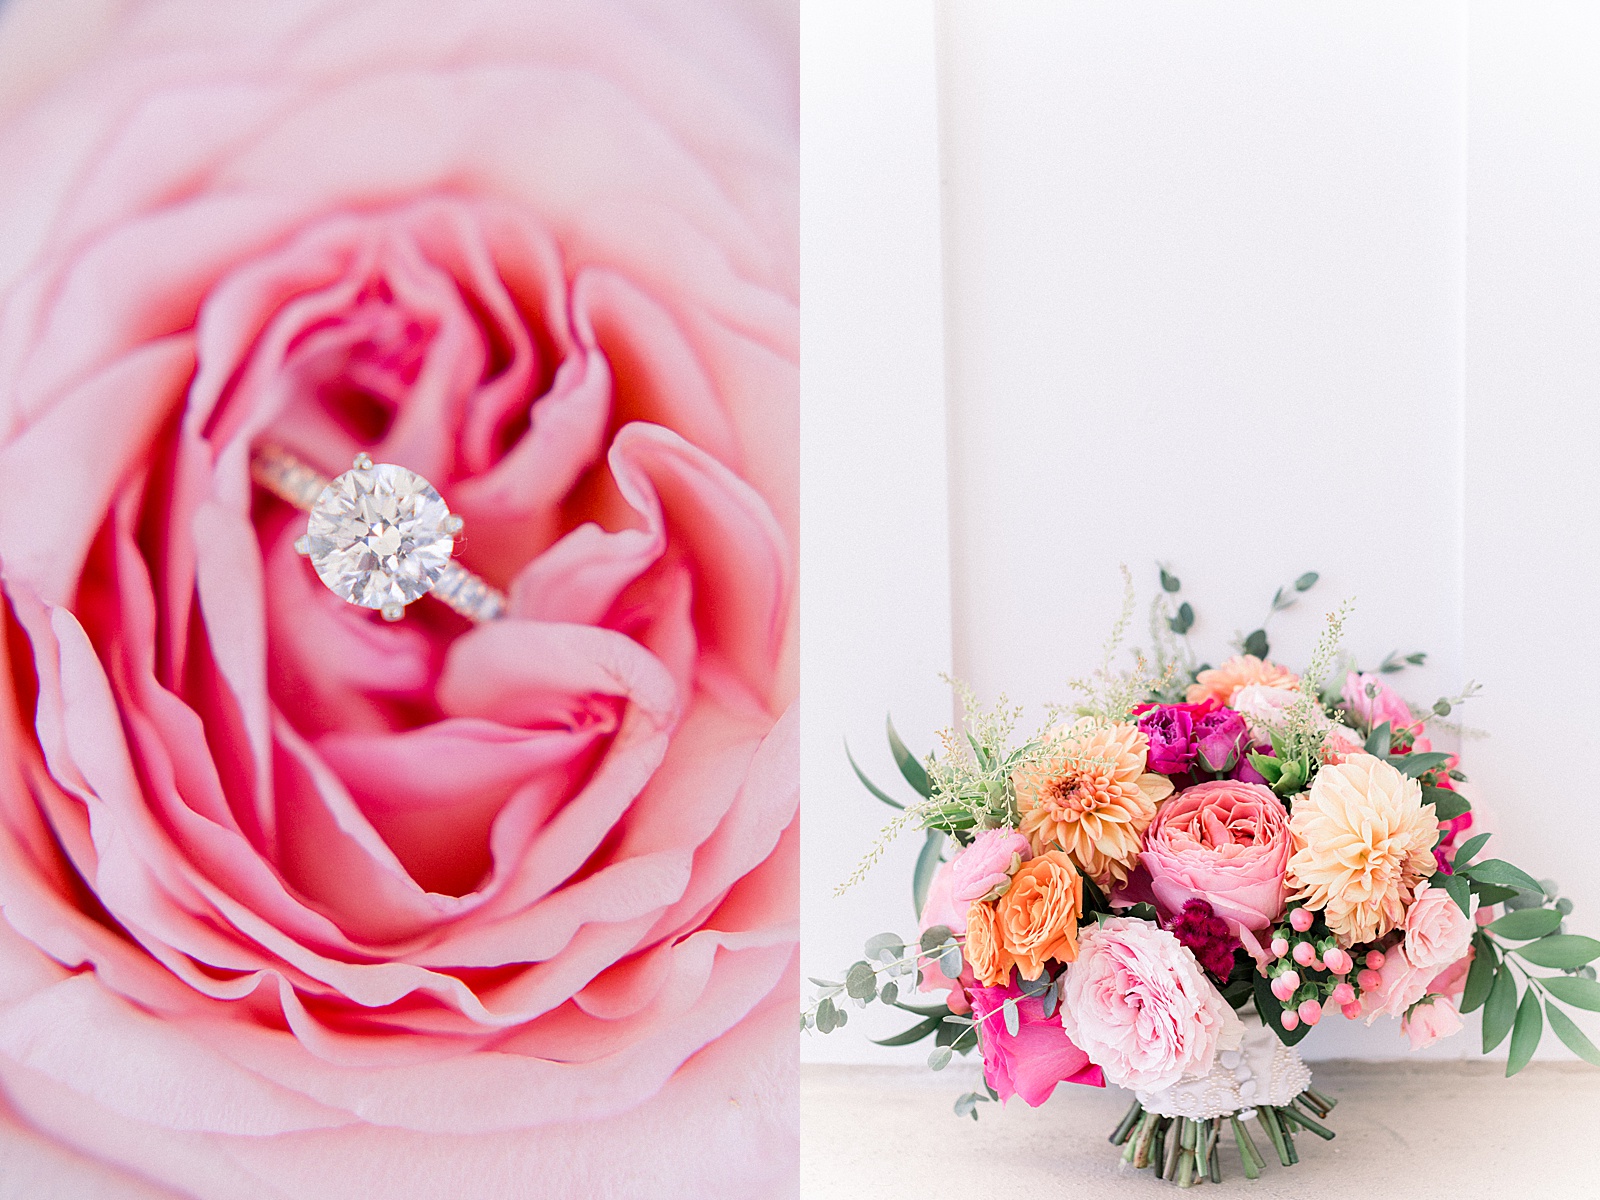 Wedding-ring-in-flower